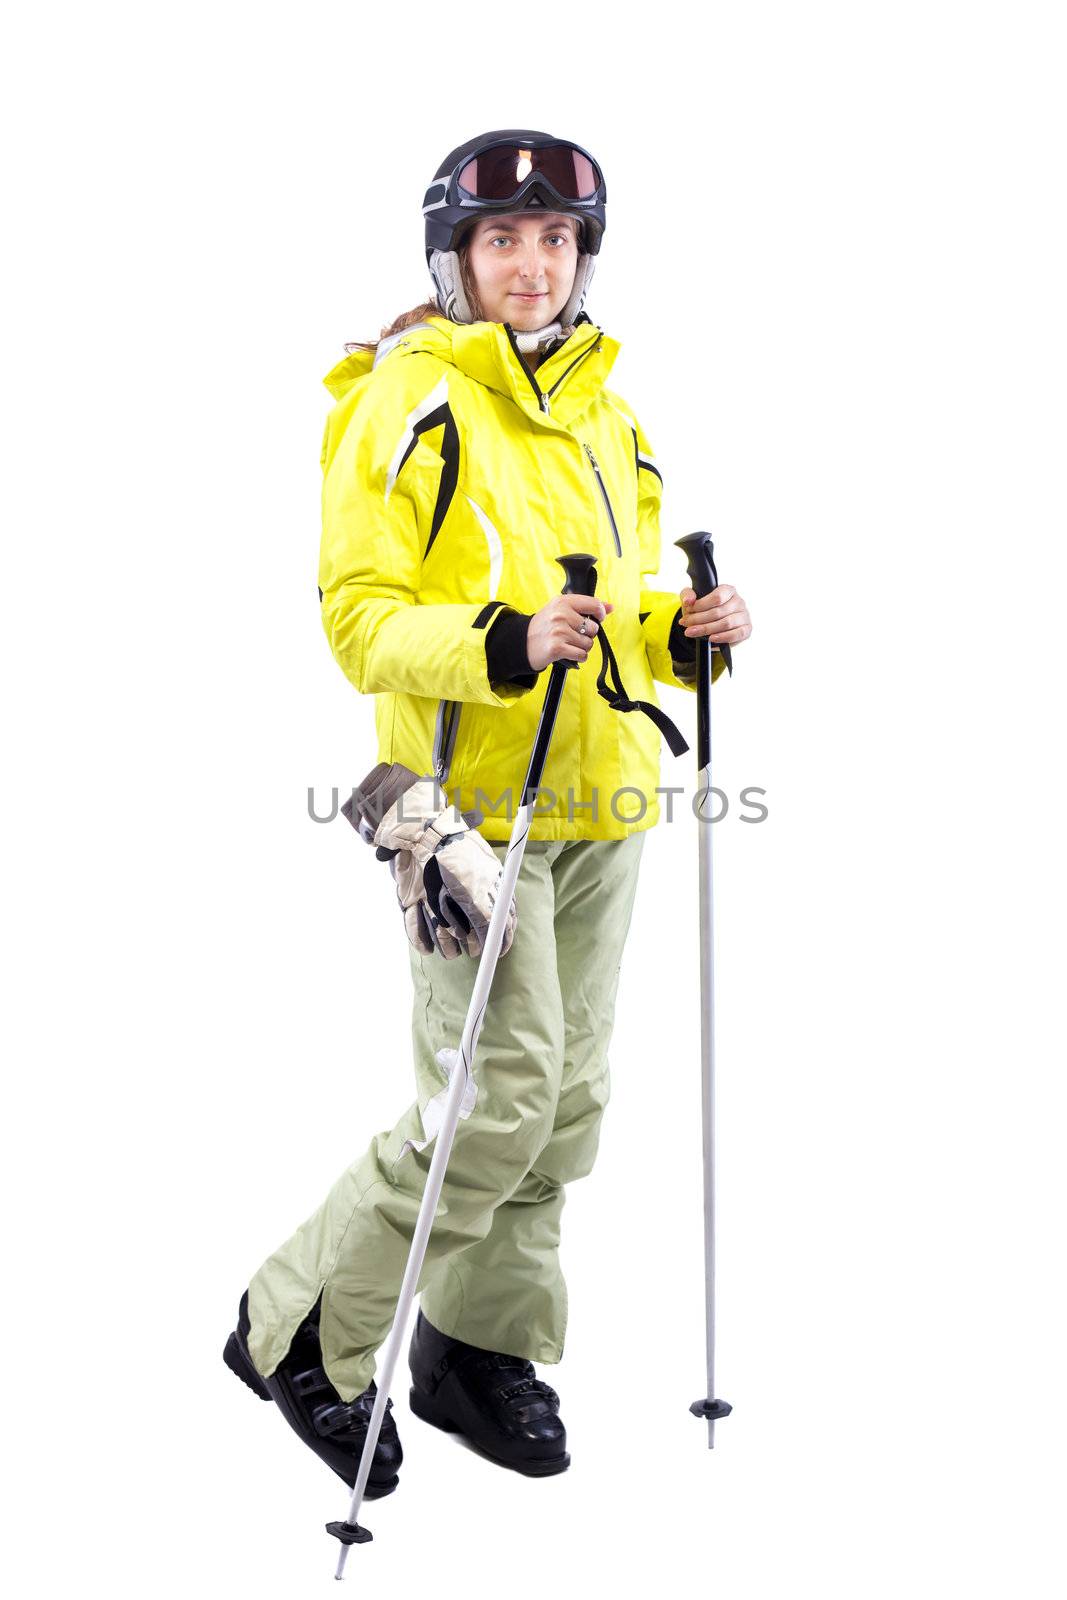 female skier portrait isolated on white background